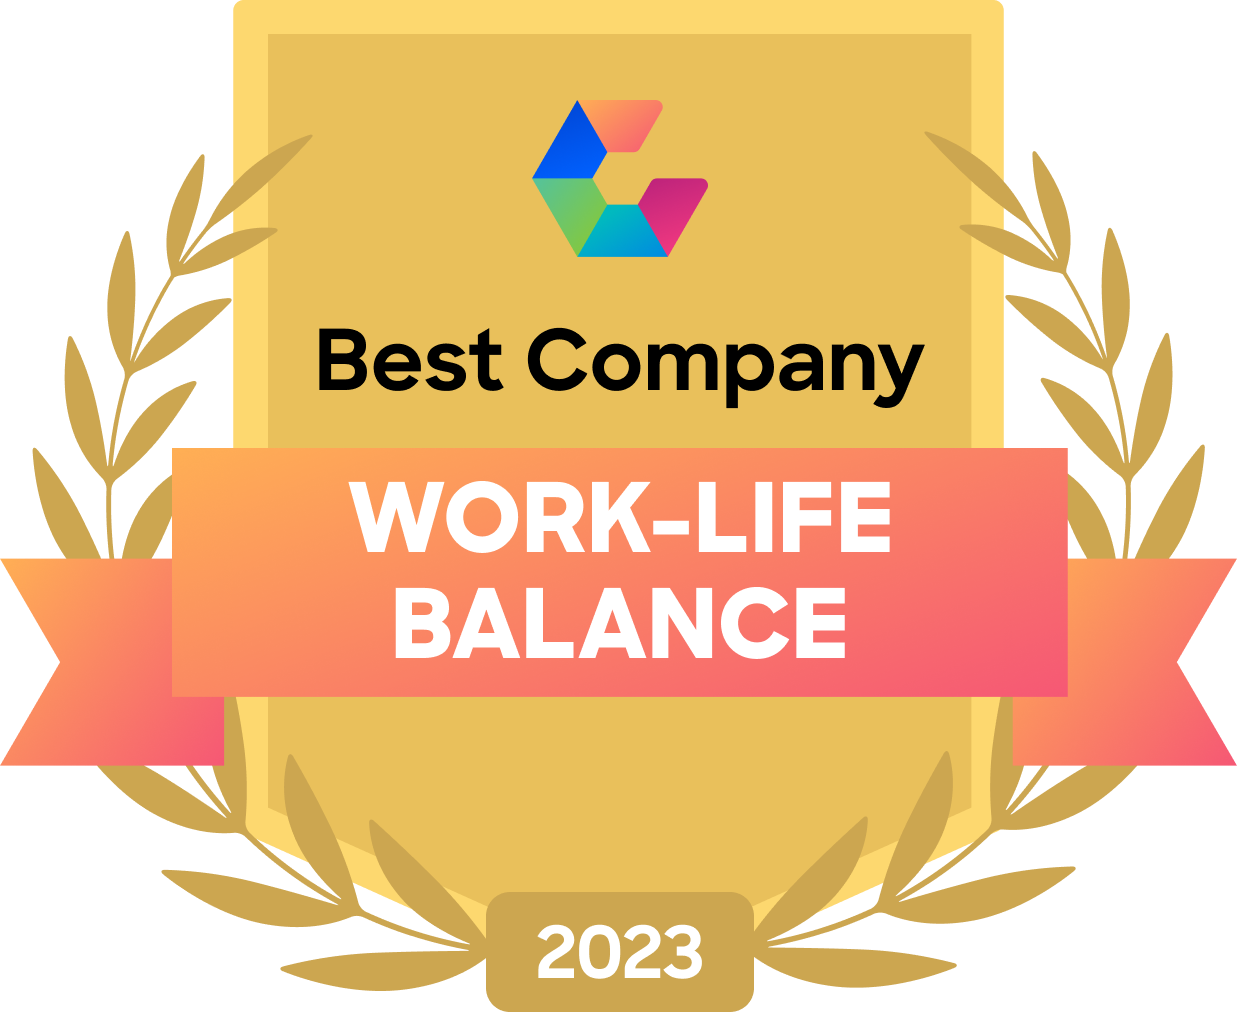 Best Company Work-Life Balance 2023